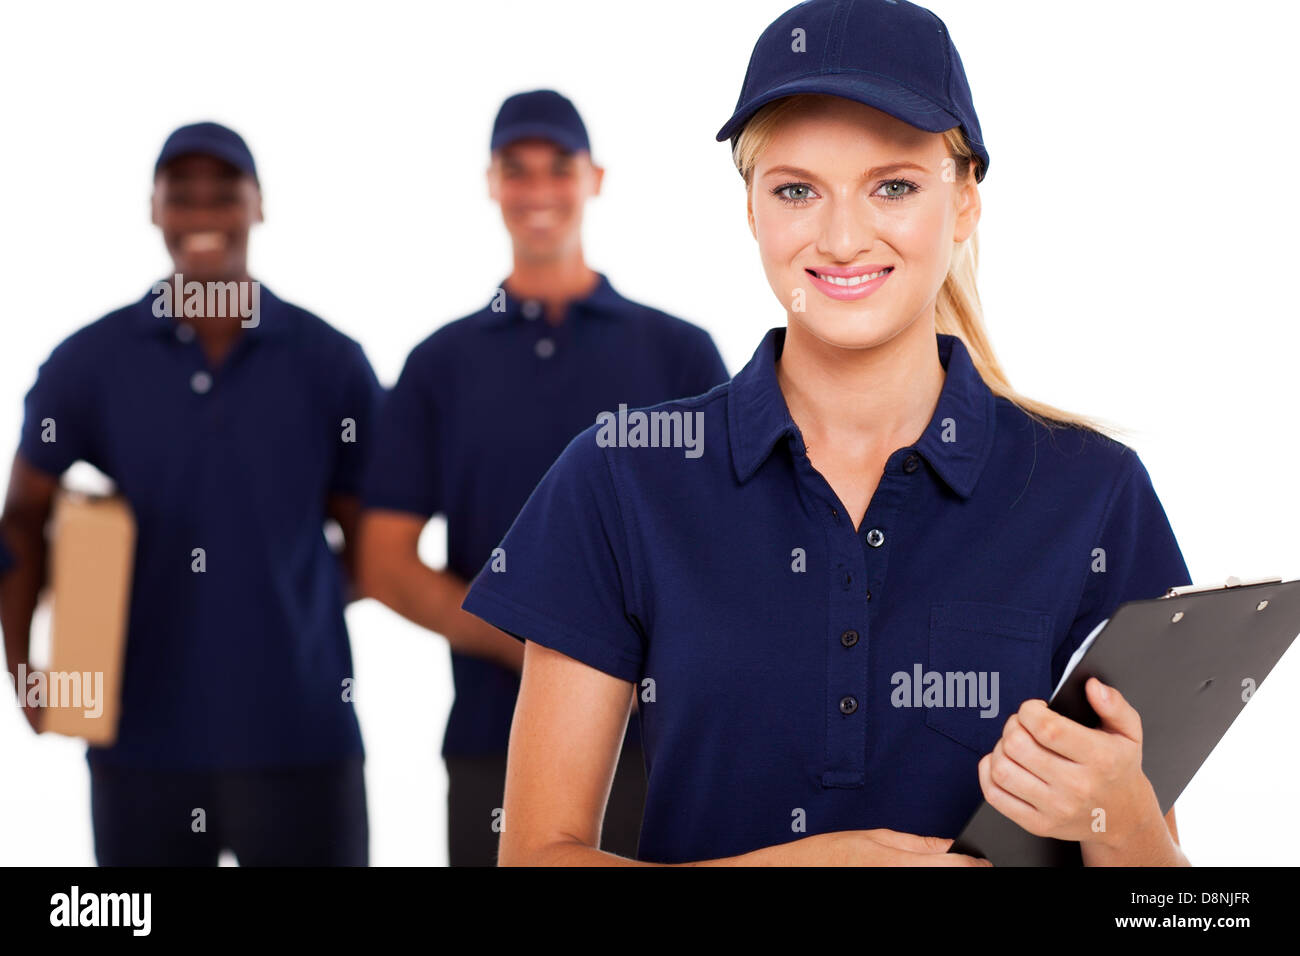 professional delivery service staff studio portrait Stock Photo